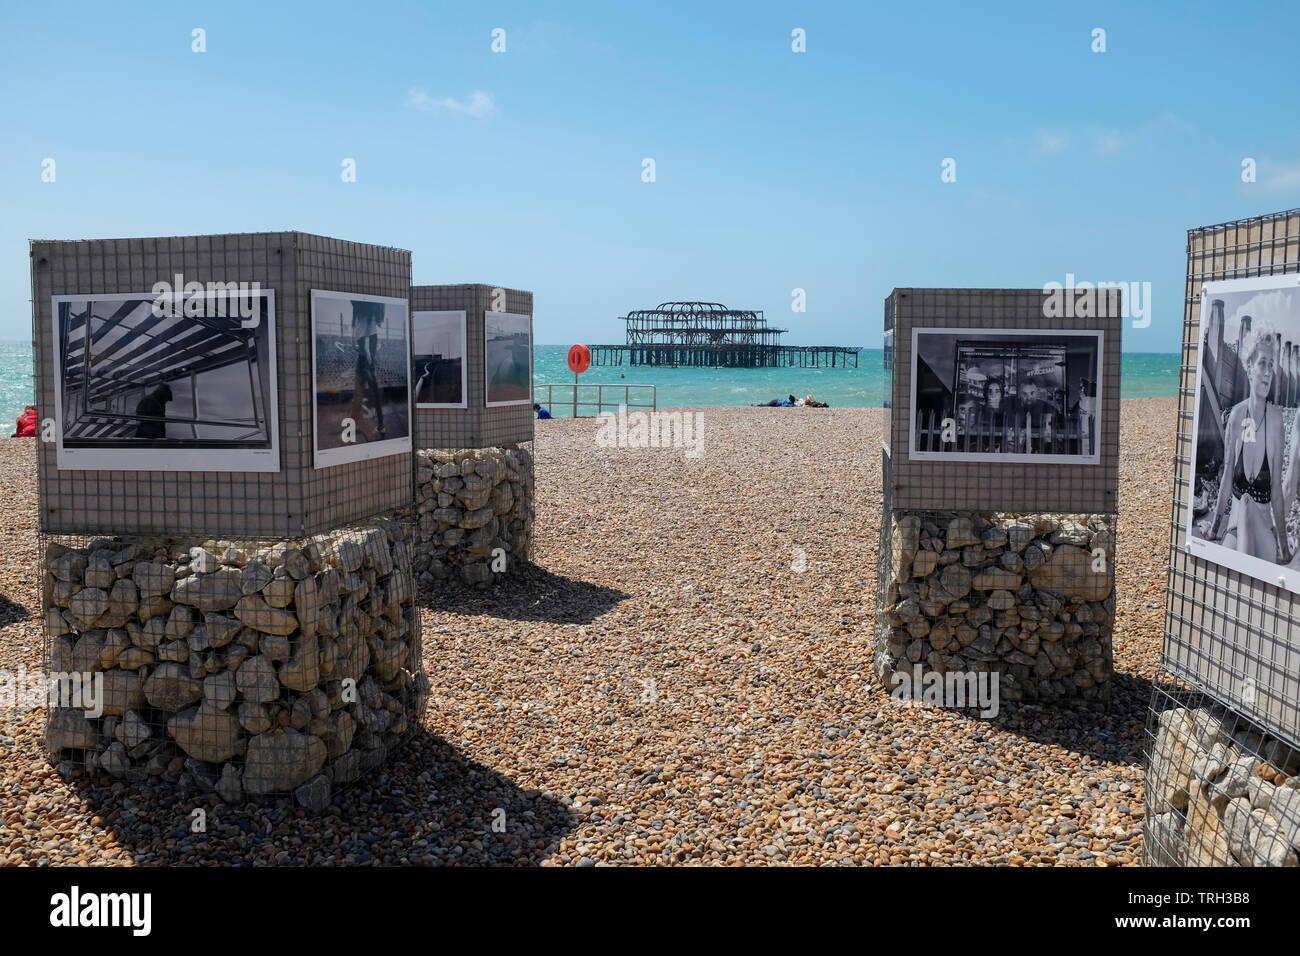 A photography exhibition on Brighton Beach showcasing local creative talent, Brighton Beach, Brighton. Stock Photo